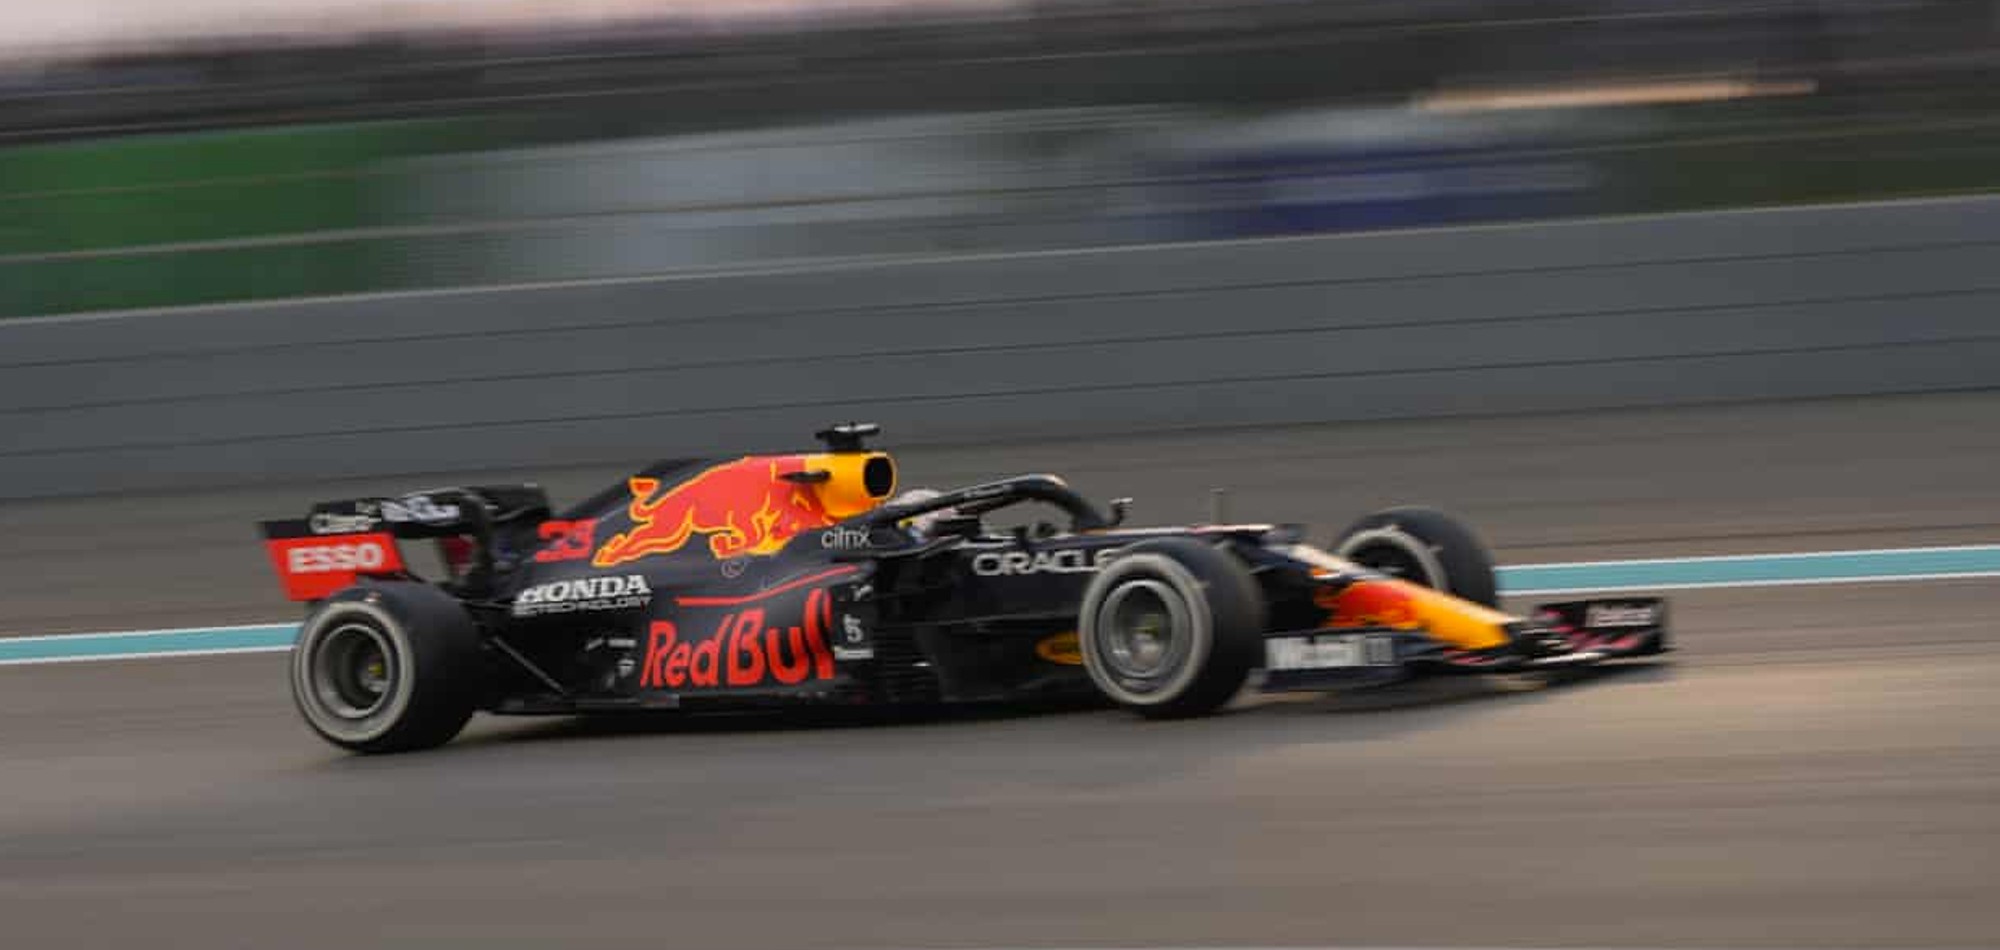  Max Verstappen beats Lewis Hamilton to F1 world title on last lap in Abu Dhabi